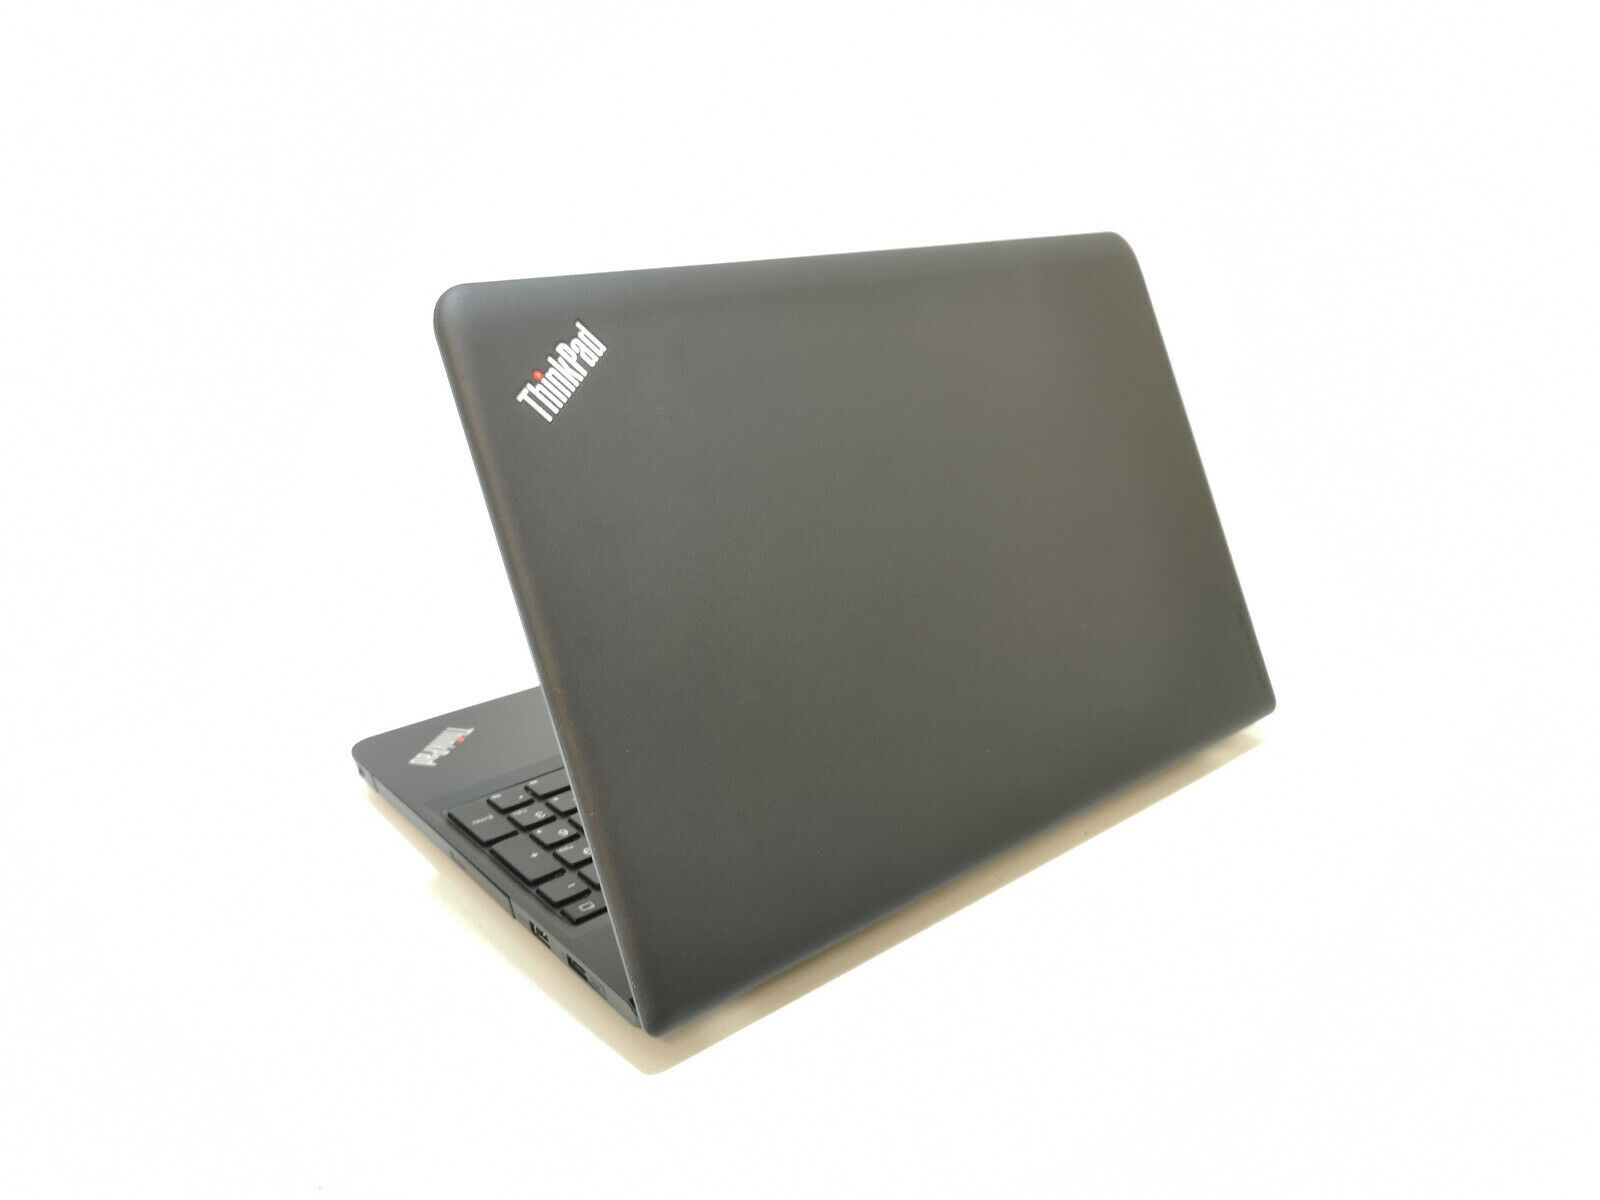 Refurbished Lenovo E560 Laptop PC